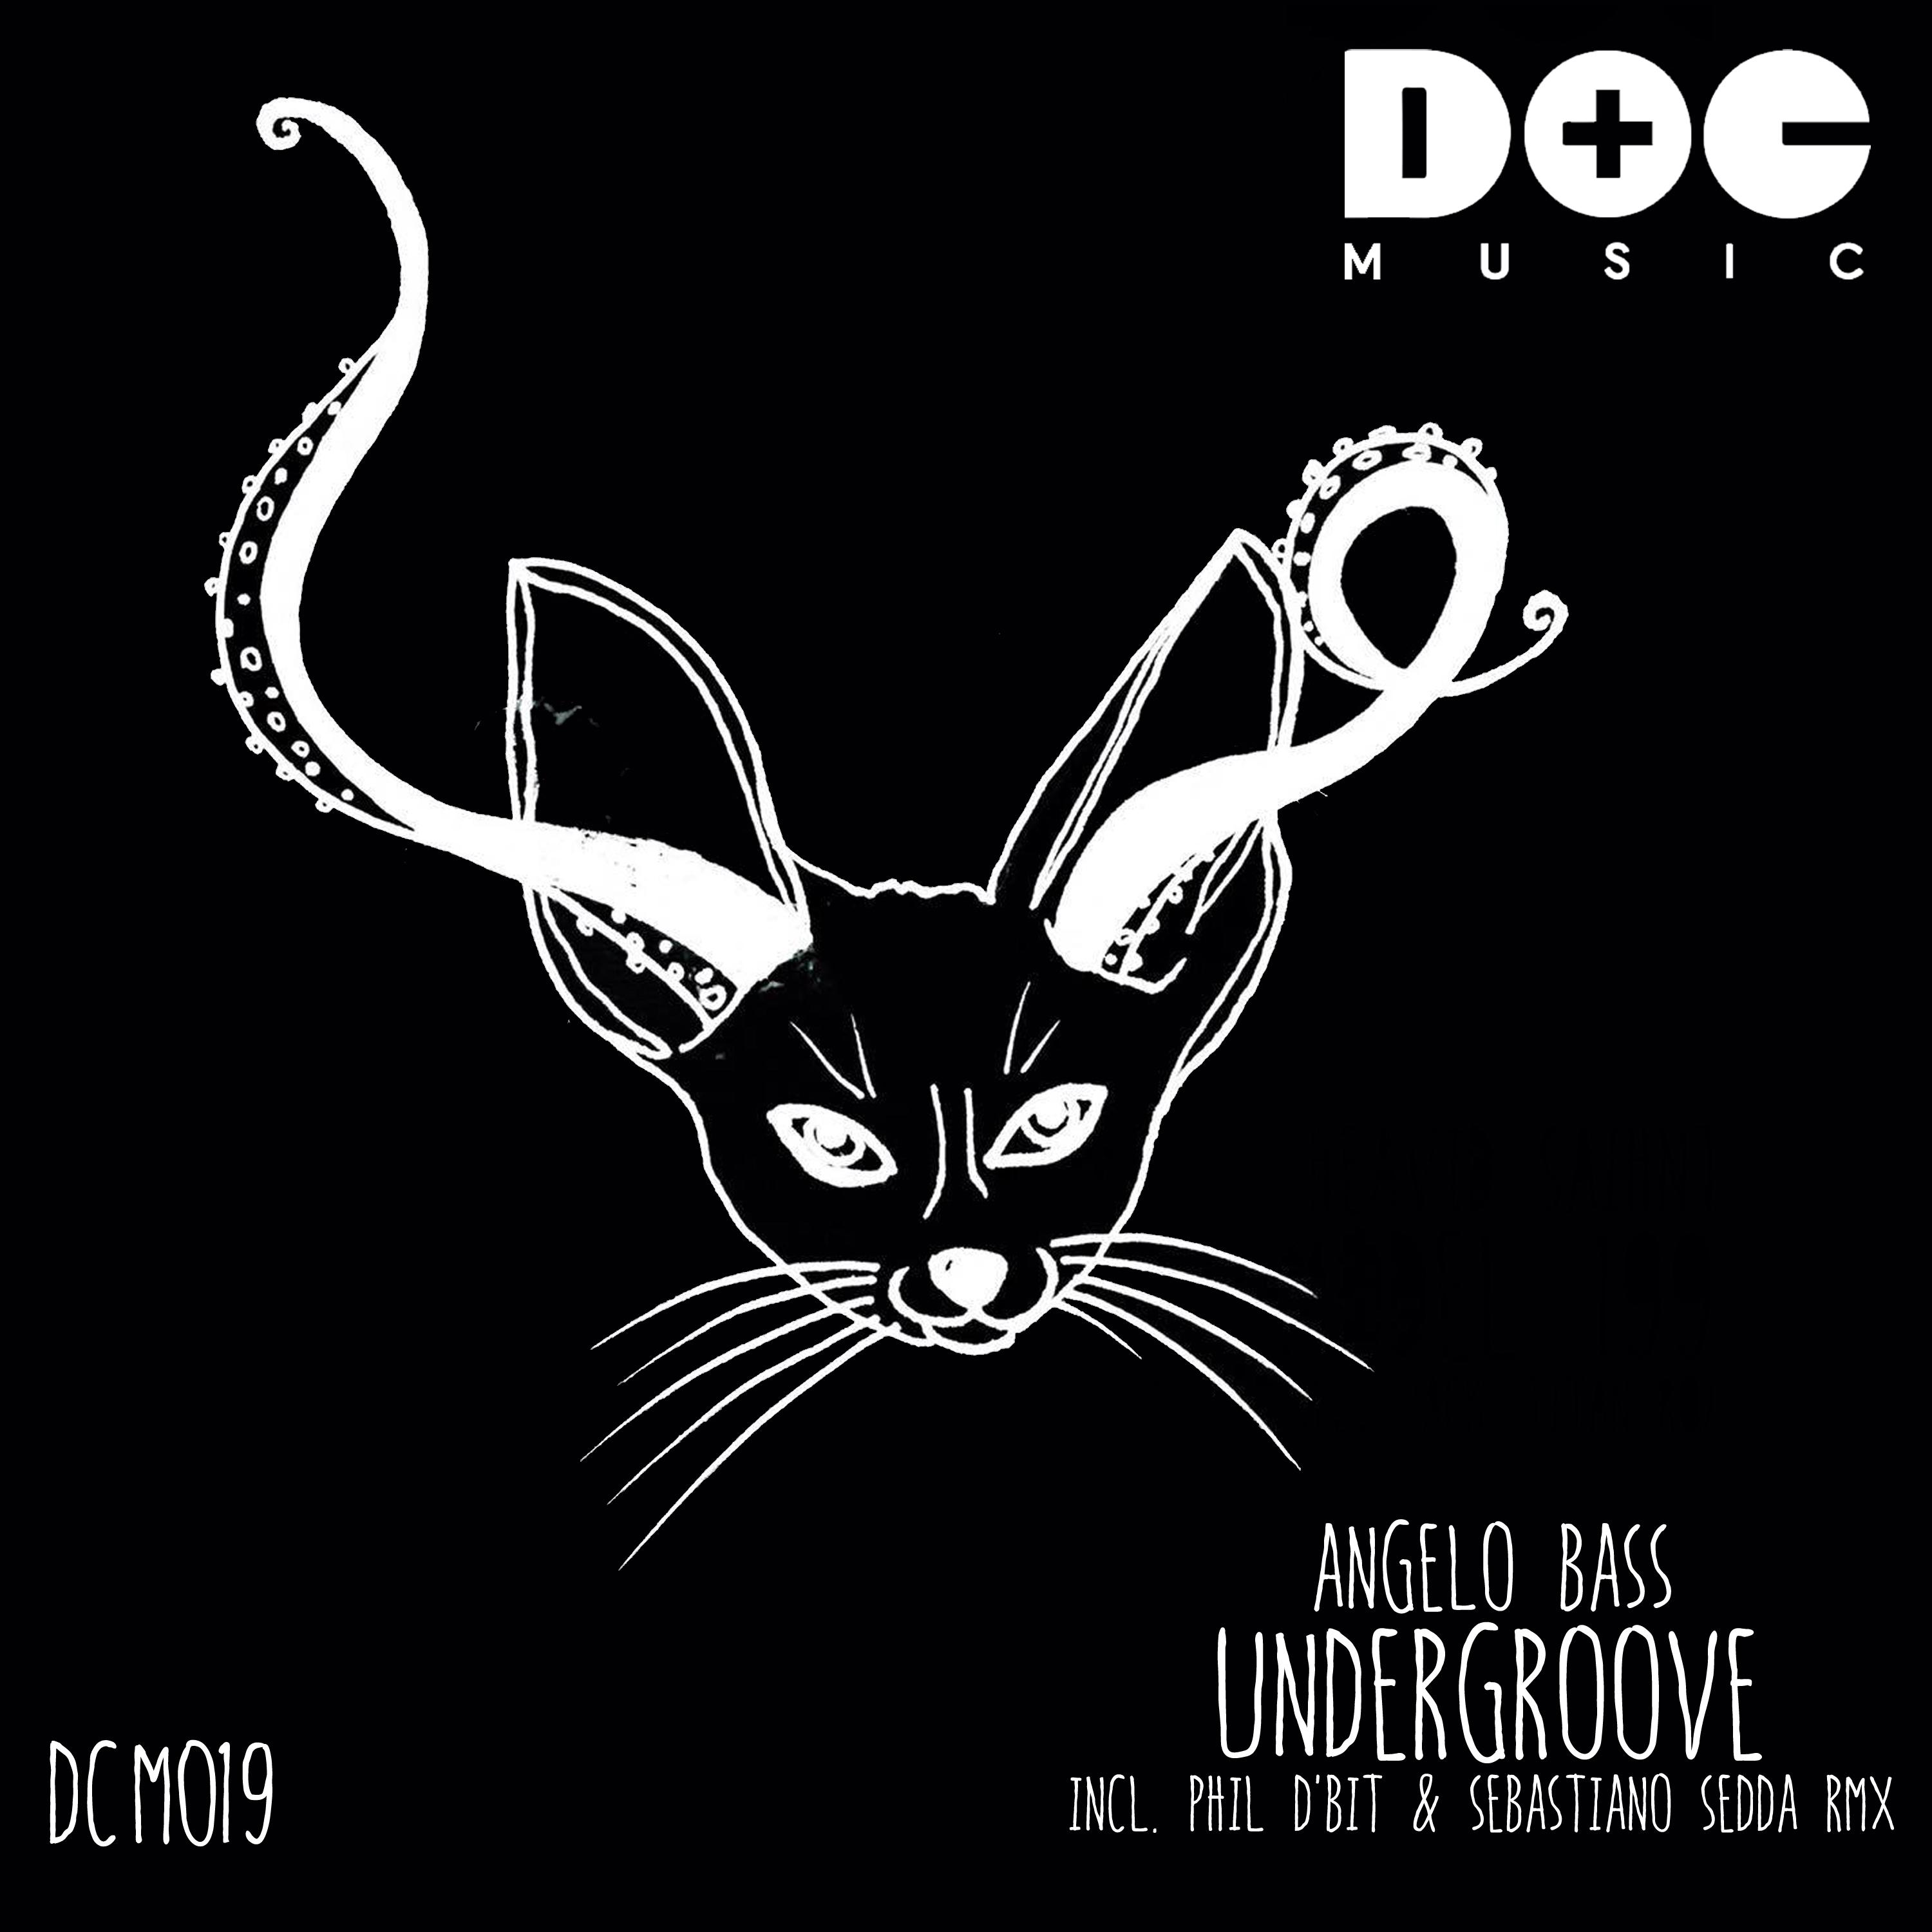 Undergroove (Phil d'bit & Sebastiano Sedda Remix)